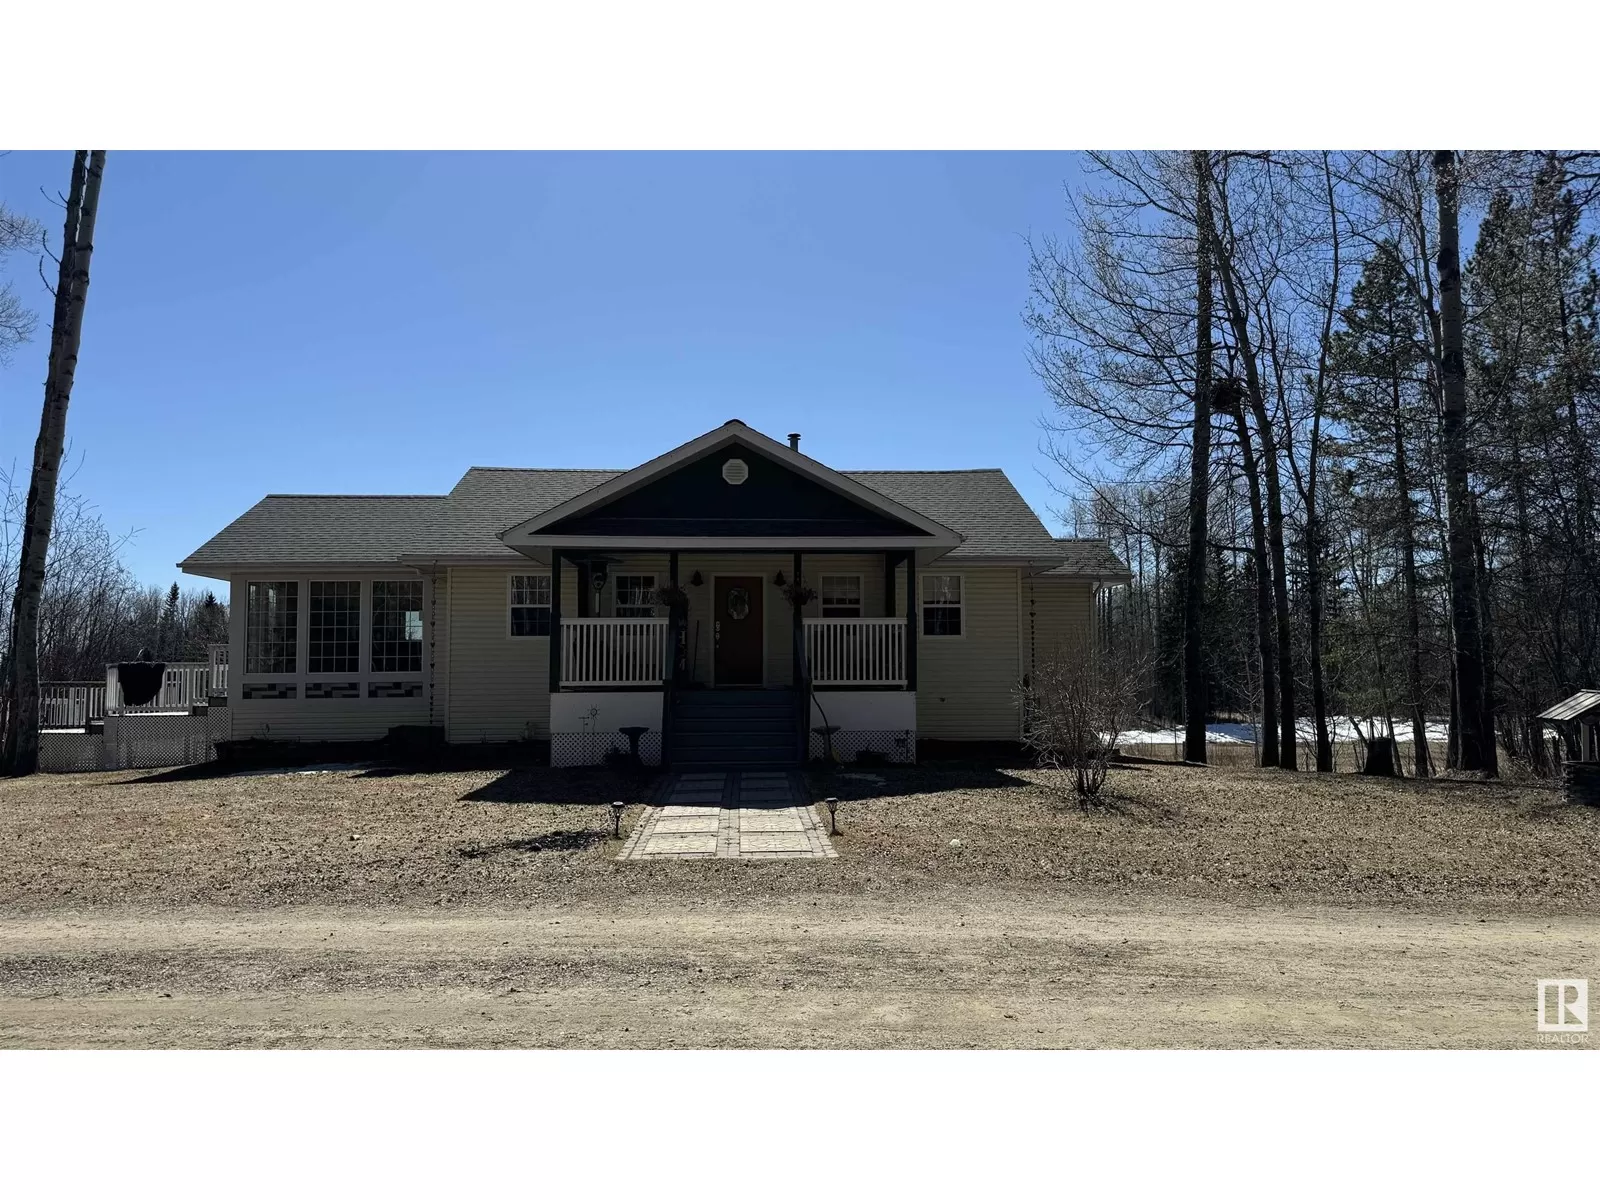 House for rent: 19029 Township Road 530a, Rural Yellowhead, Alberta T7E 3B7